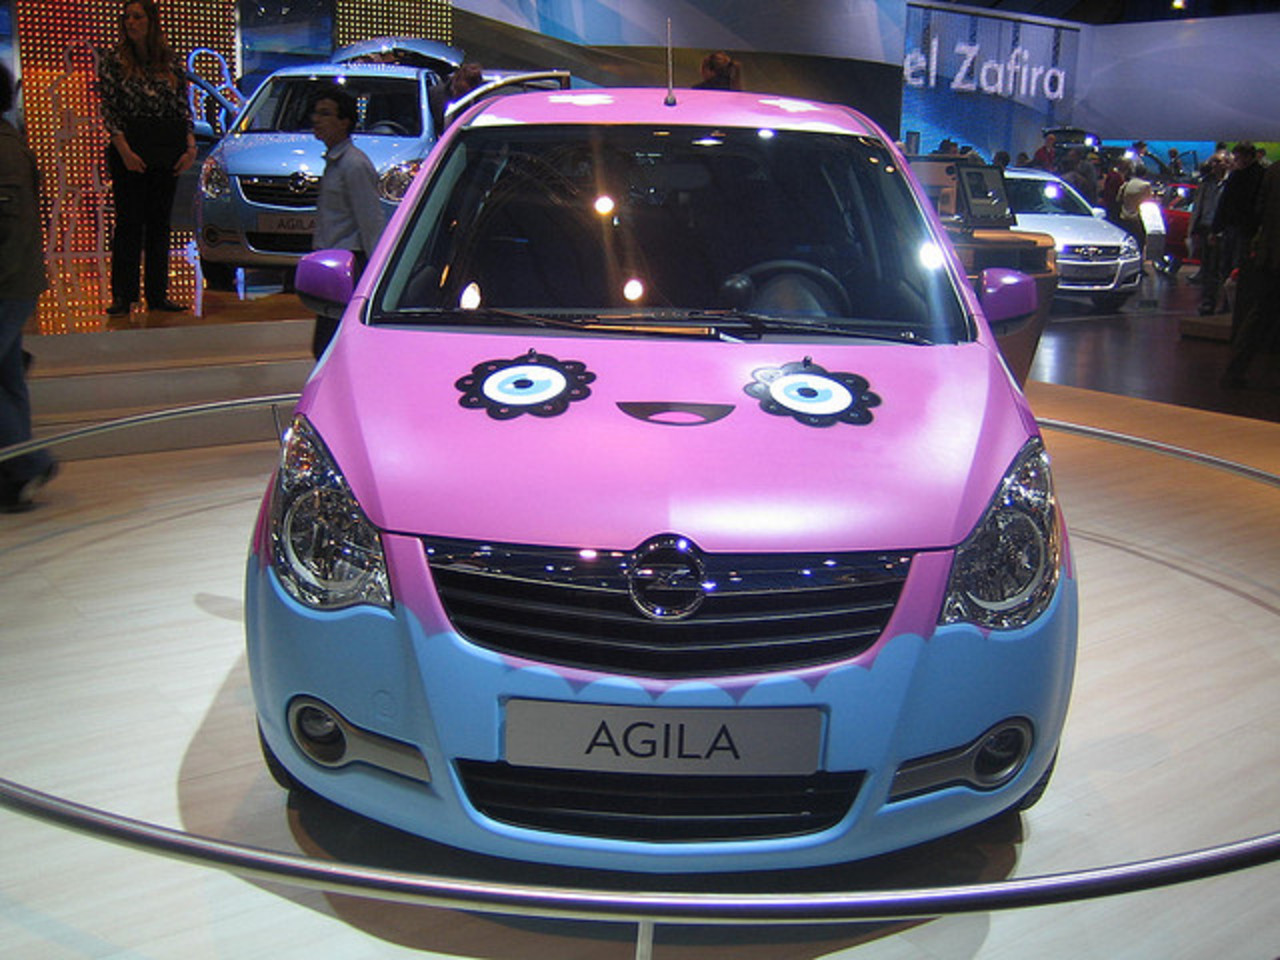 Opel Agila | Flickr - Photo Sharing!